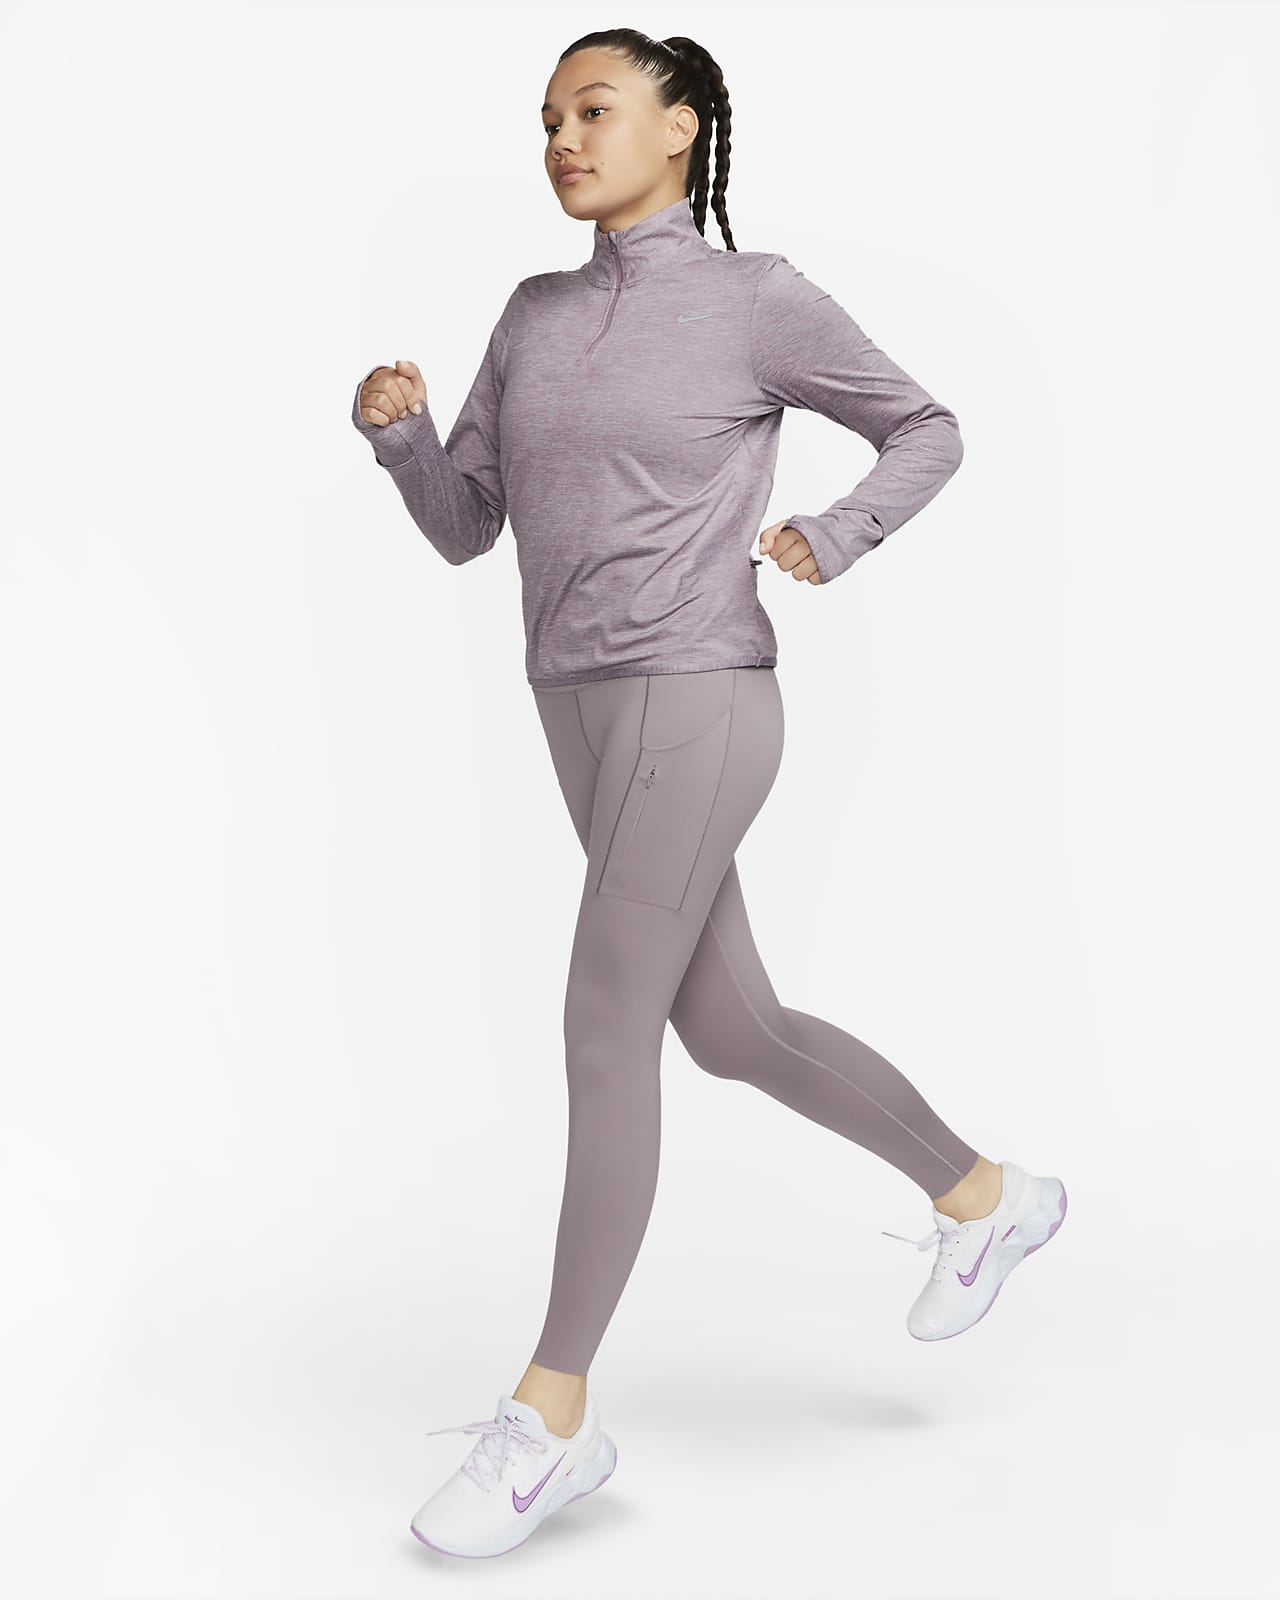 Nike Swift Element Women's UV Protection 1/4-Zip Running Top